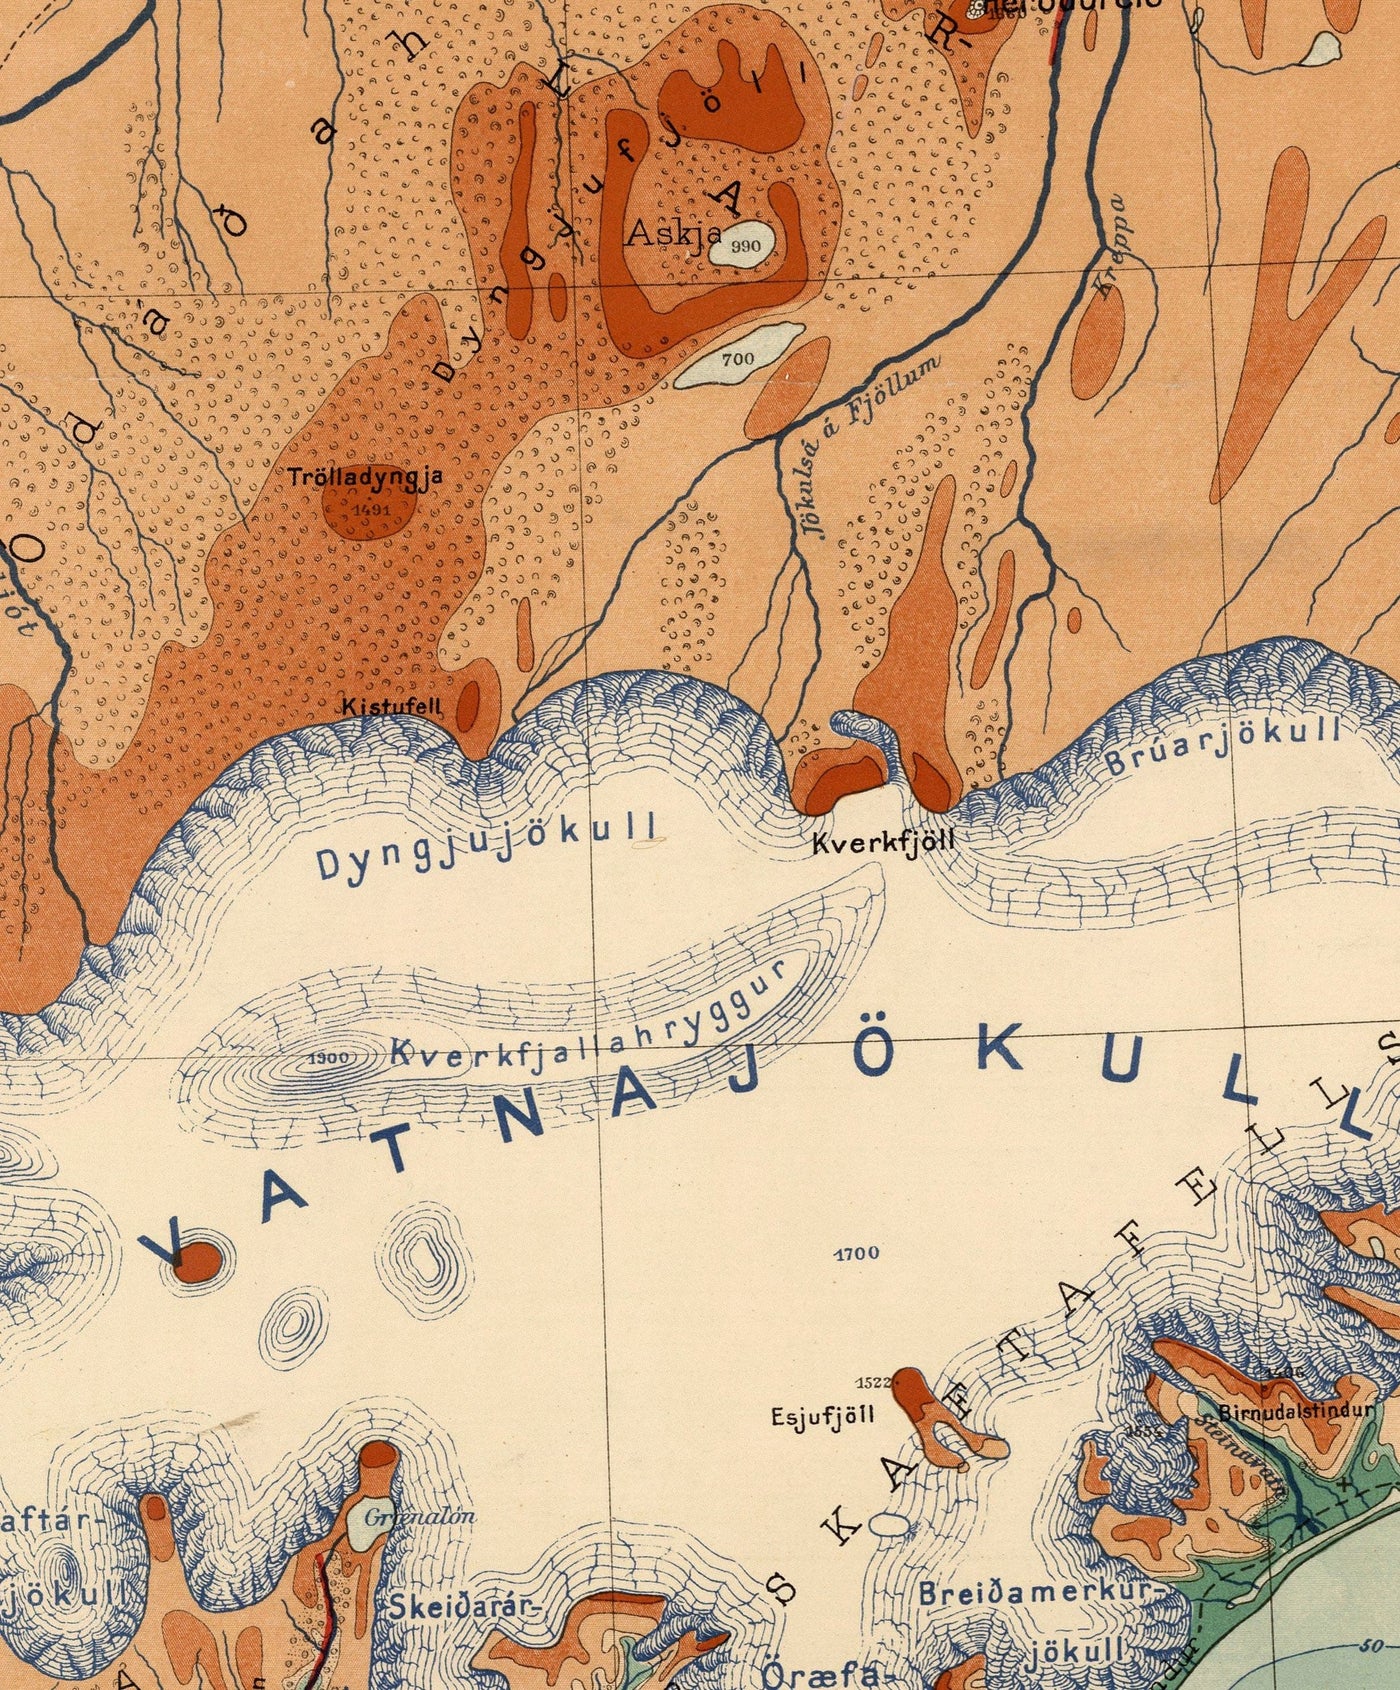 Old Map of Iceland by Samuel Eggertsson, 1928 - Reykjavik, Keflavik, Geysir, Gulfoss, Volcanoes, Glaciers